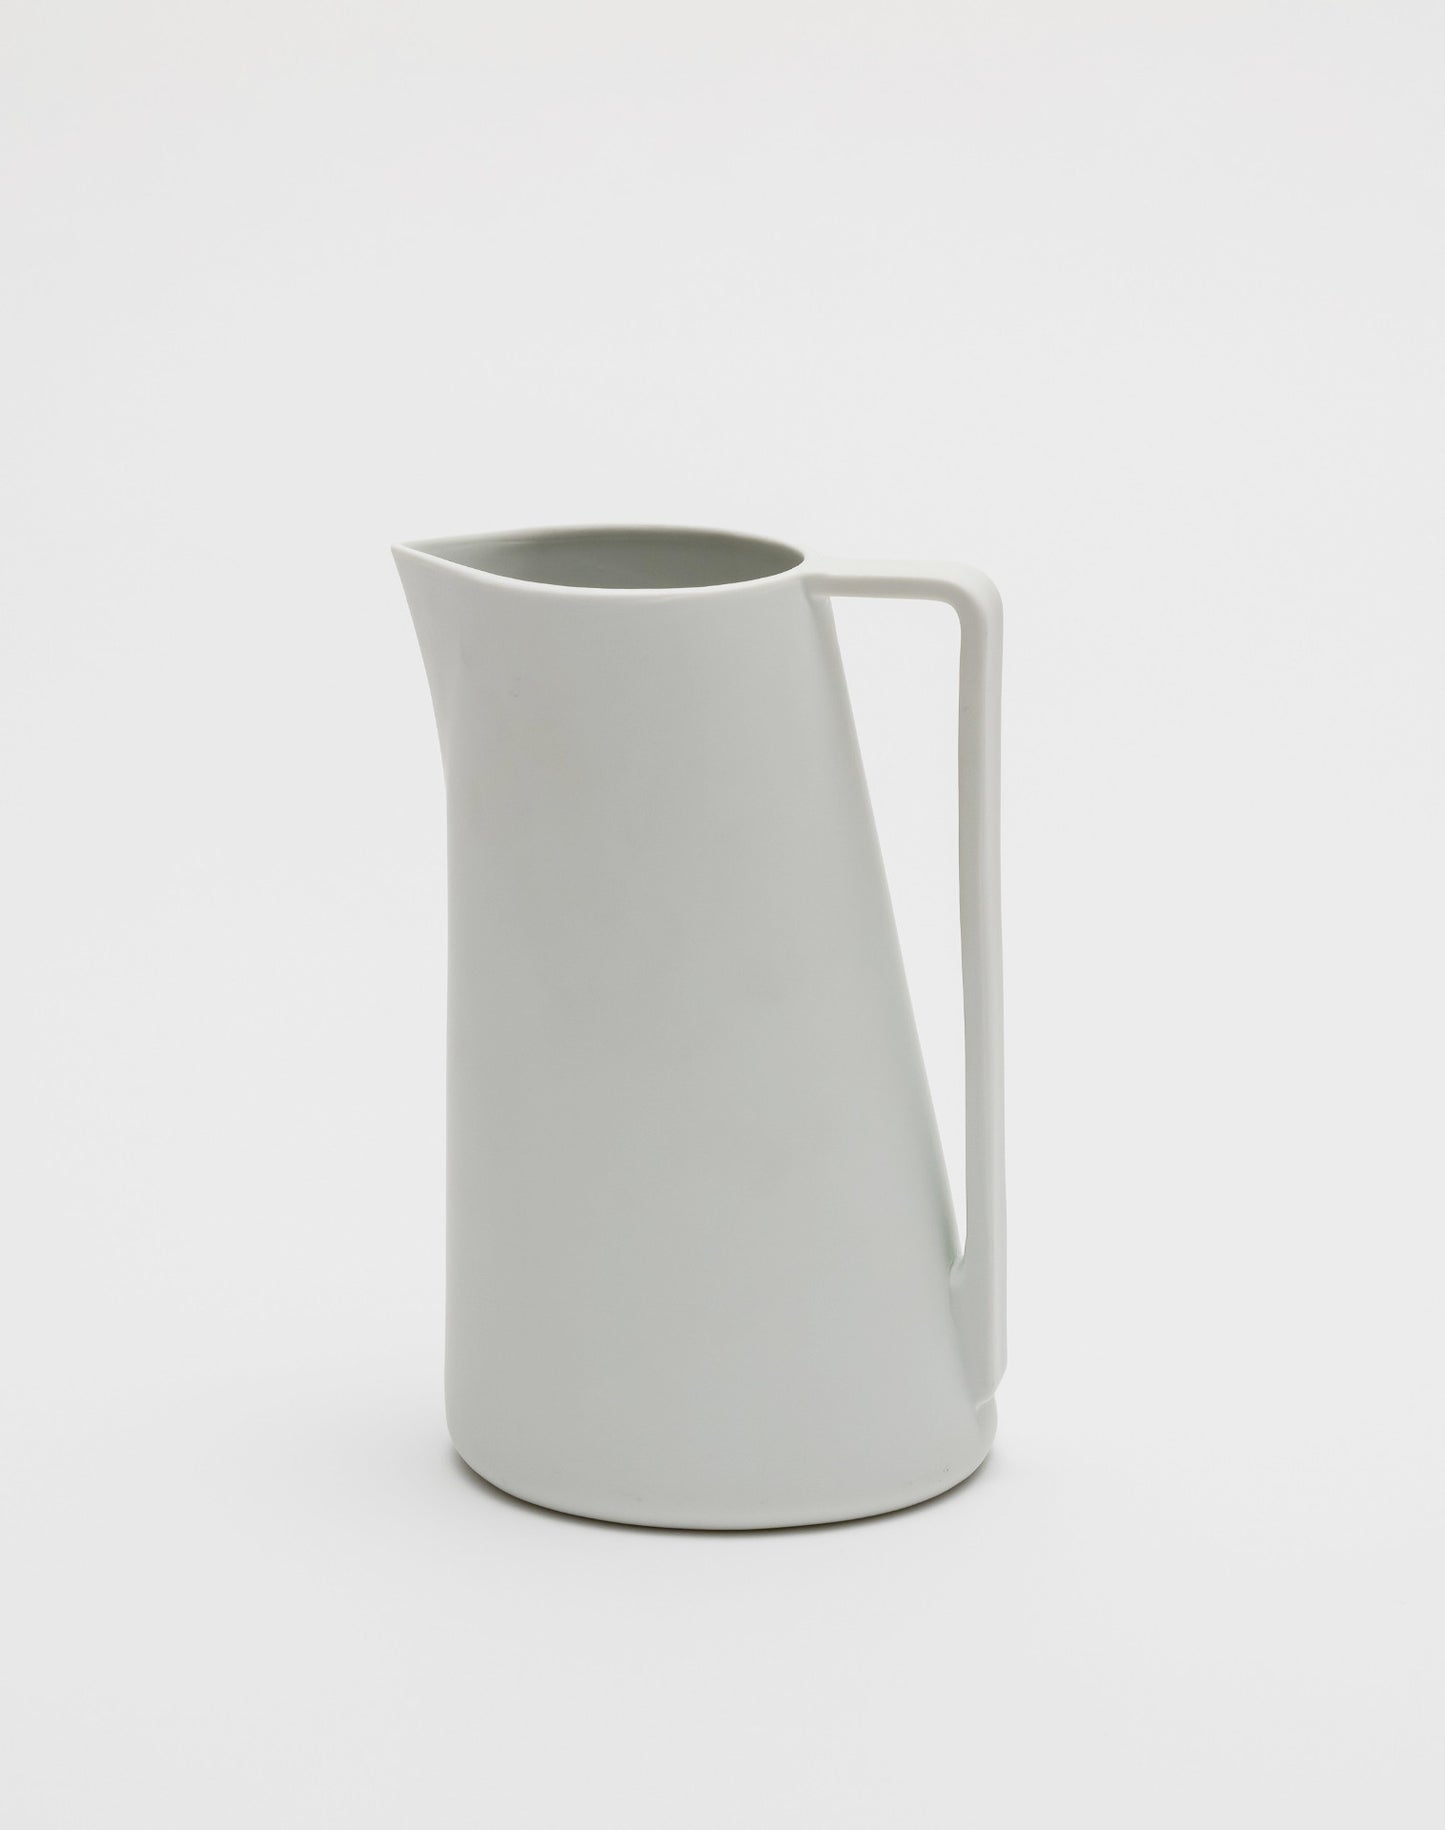 Melbourne monolab Shigeki Fujishiro Pitcher Vase 2016 arita 